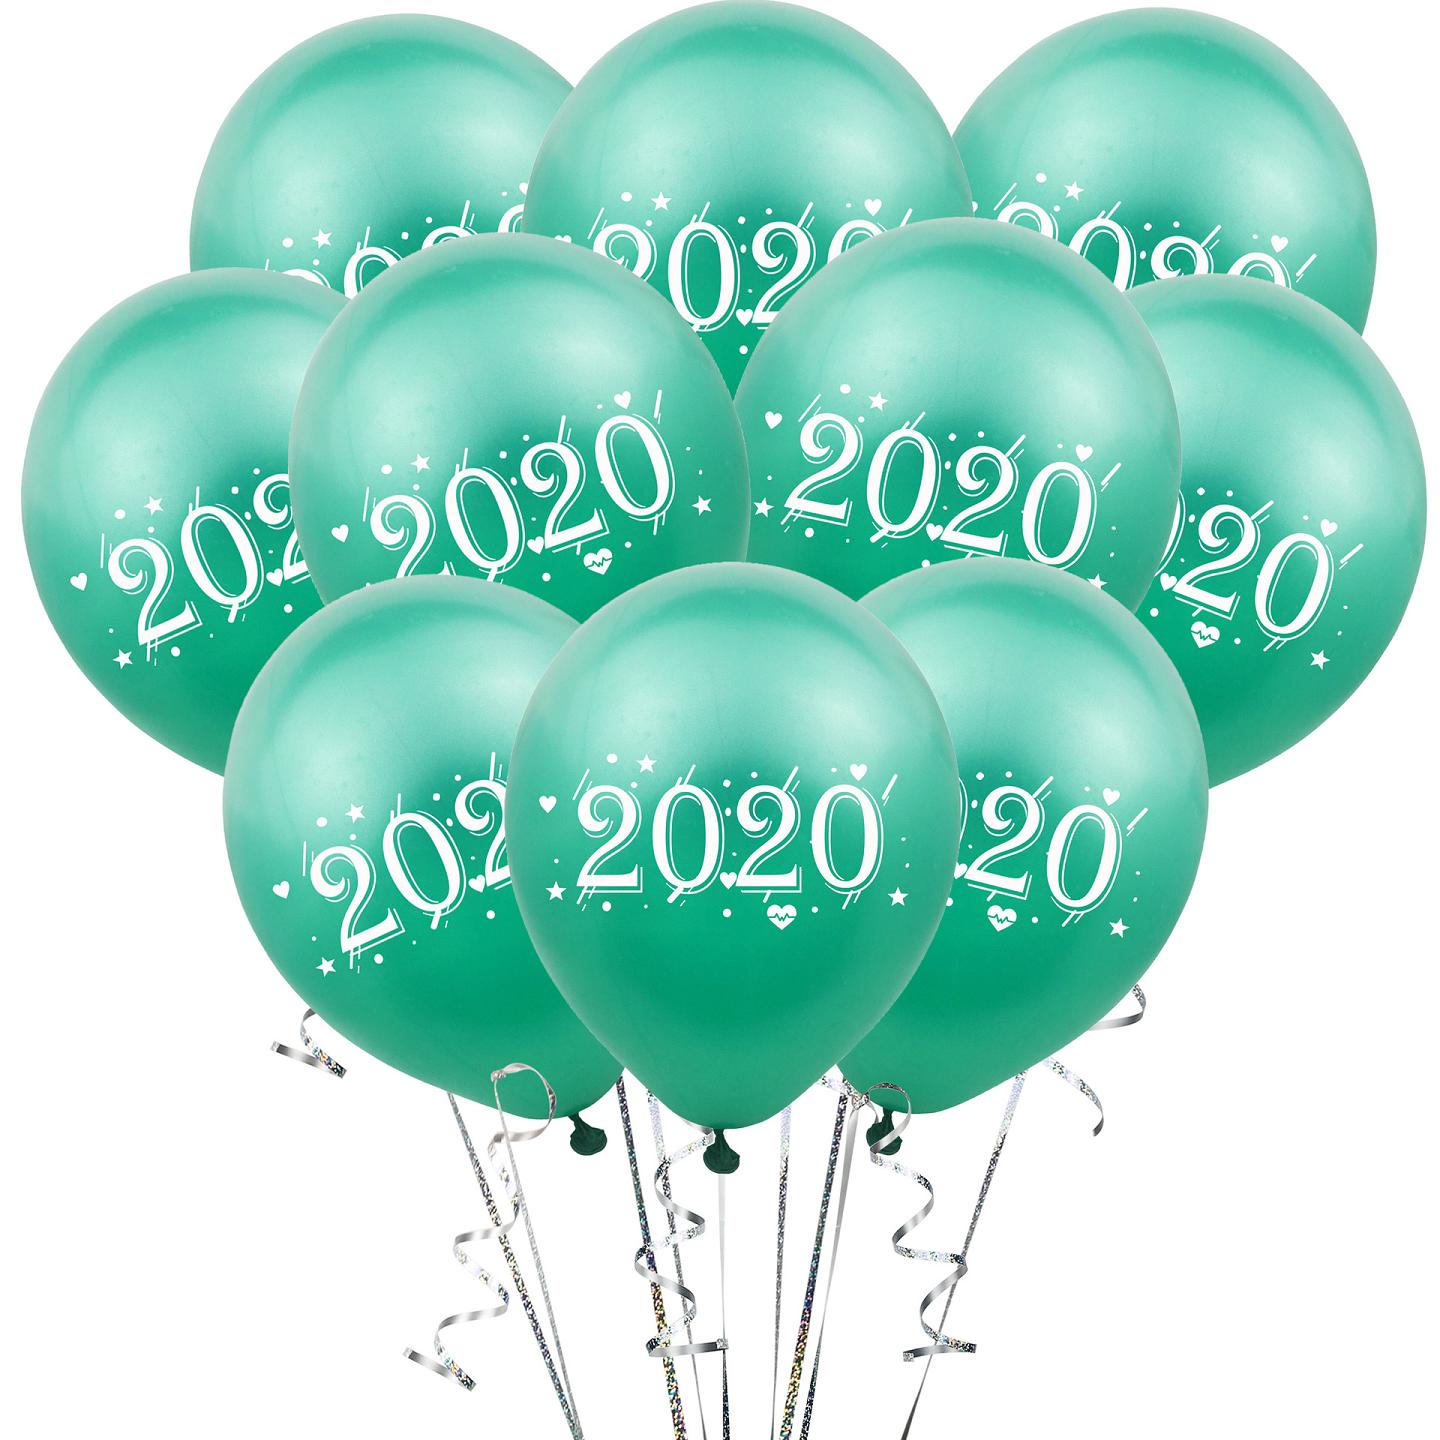 2020 12 inch latex confetti balloon balloon party set